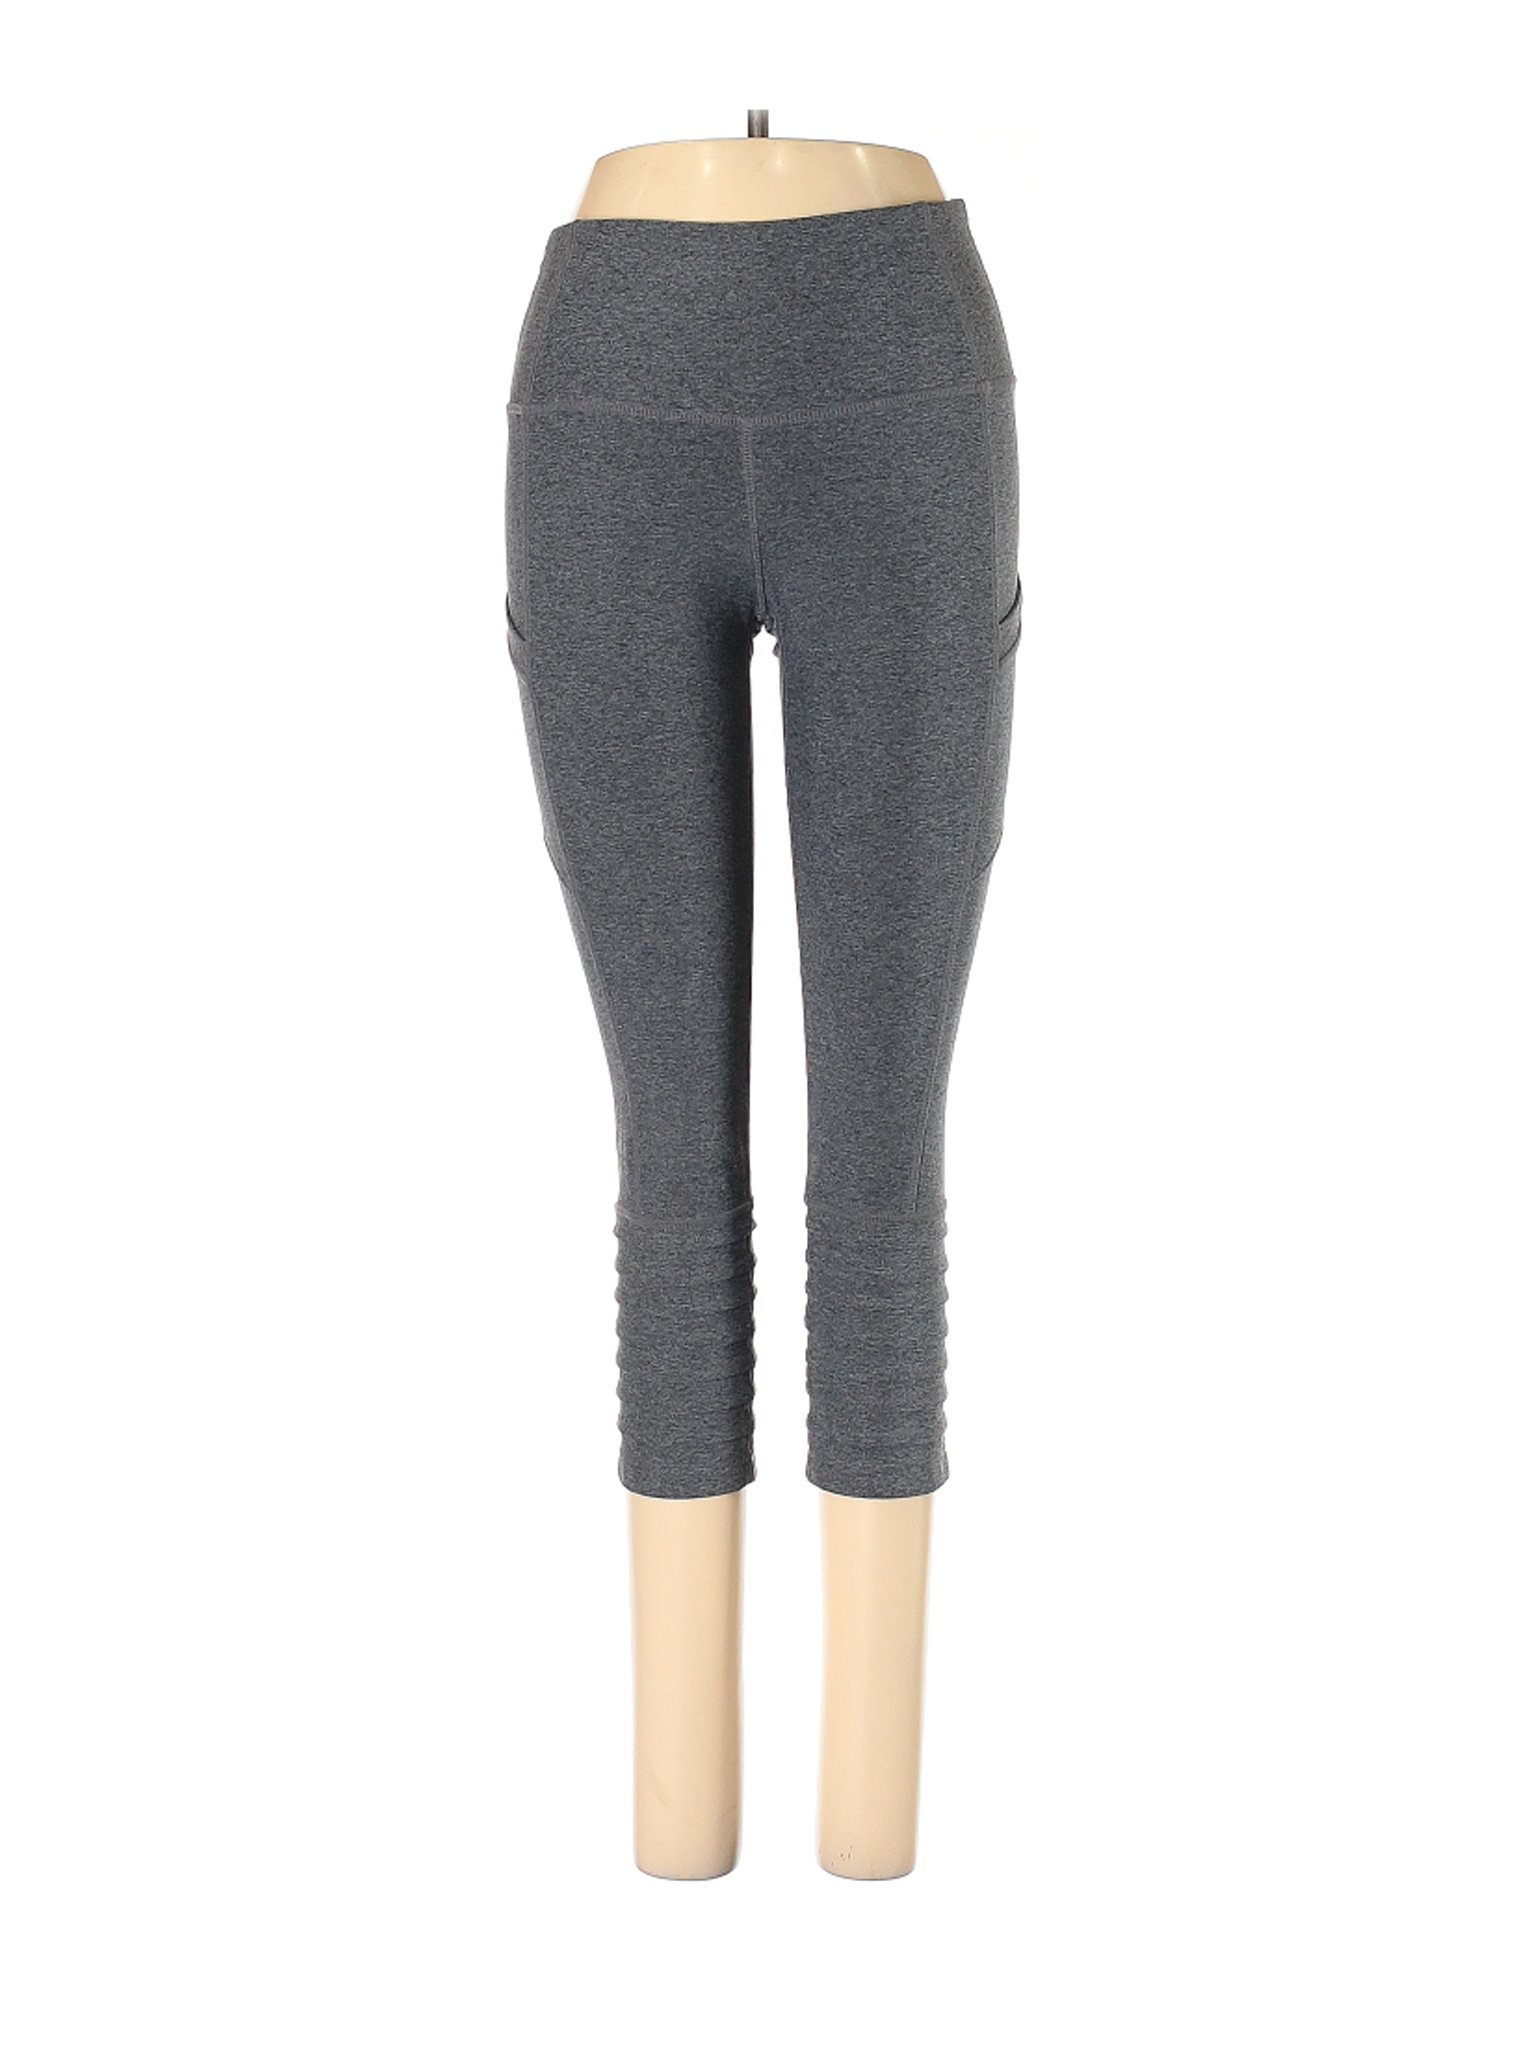 Mondetta Women Gray Active Pants S | eBay